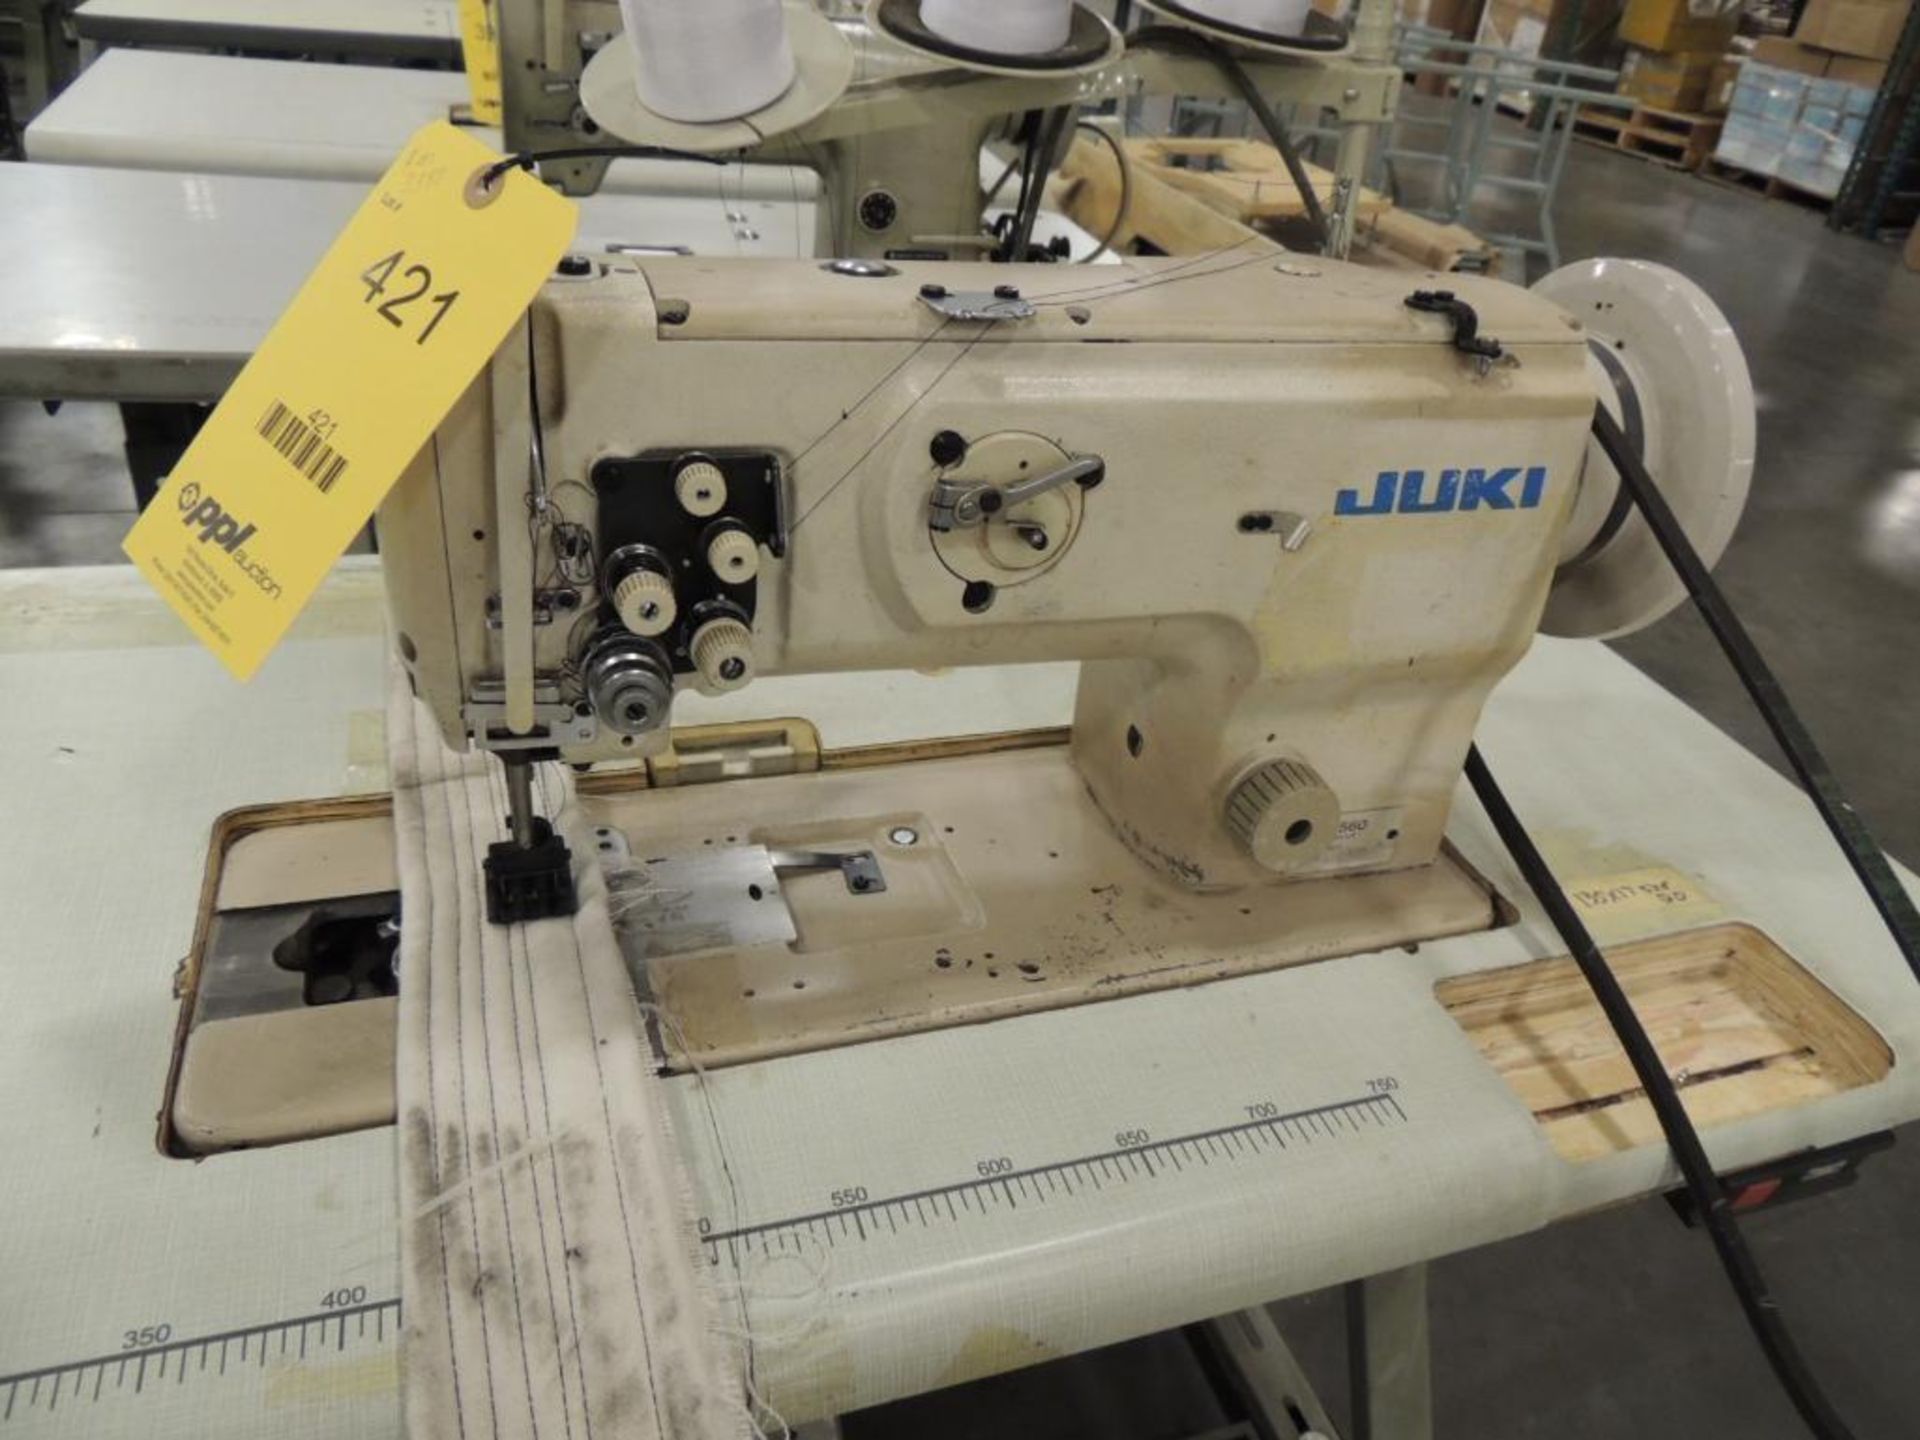 Juki LU-1560 2-Needle, 3-Thread Sewing Machine, on Table